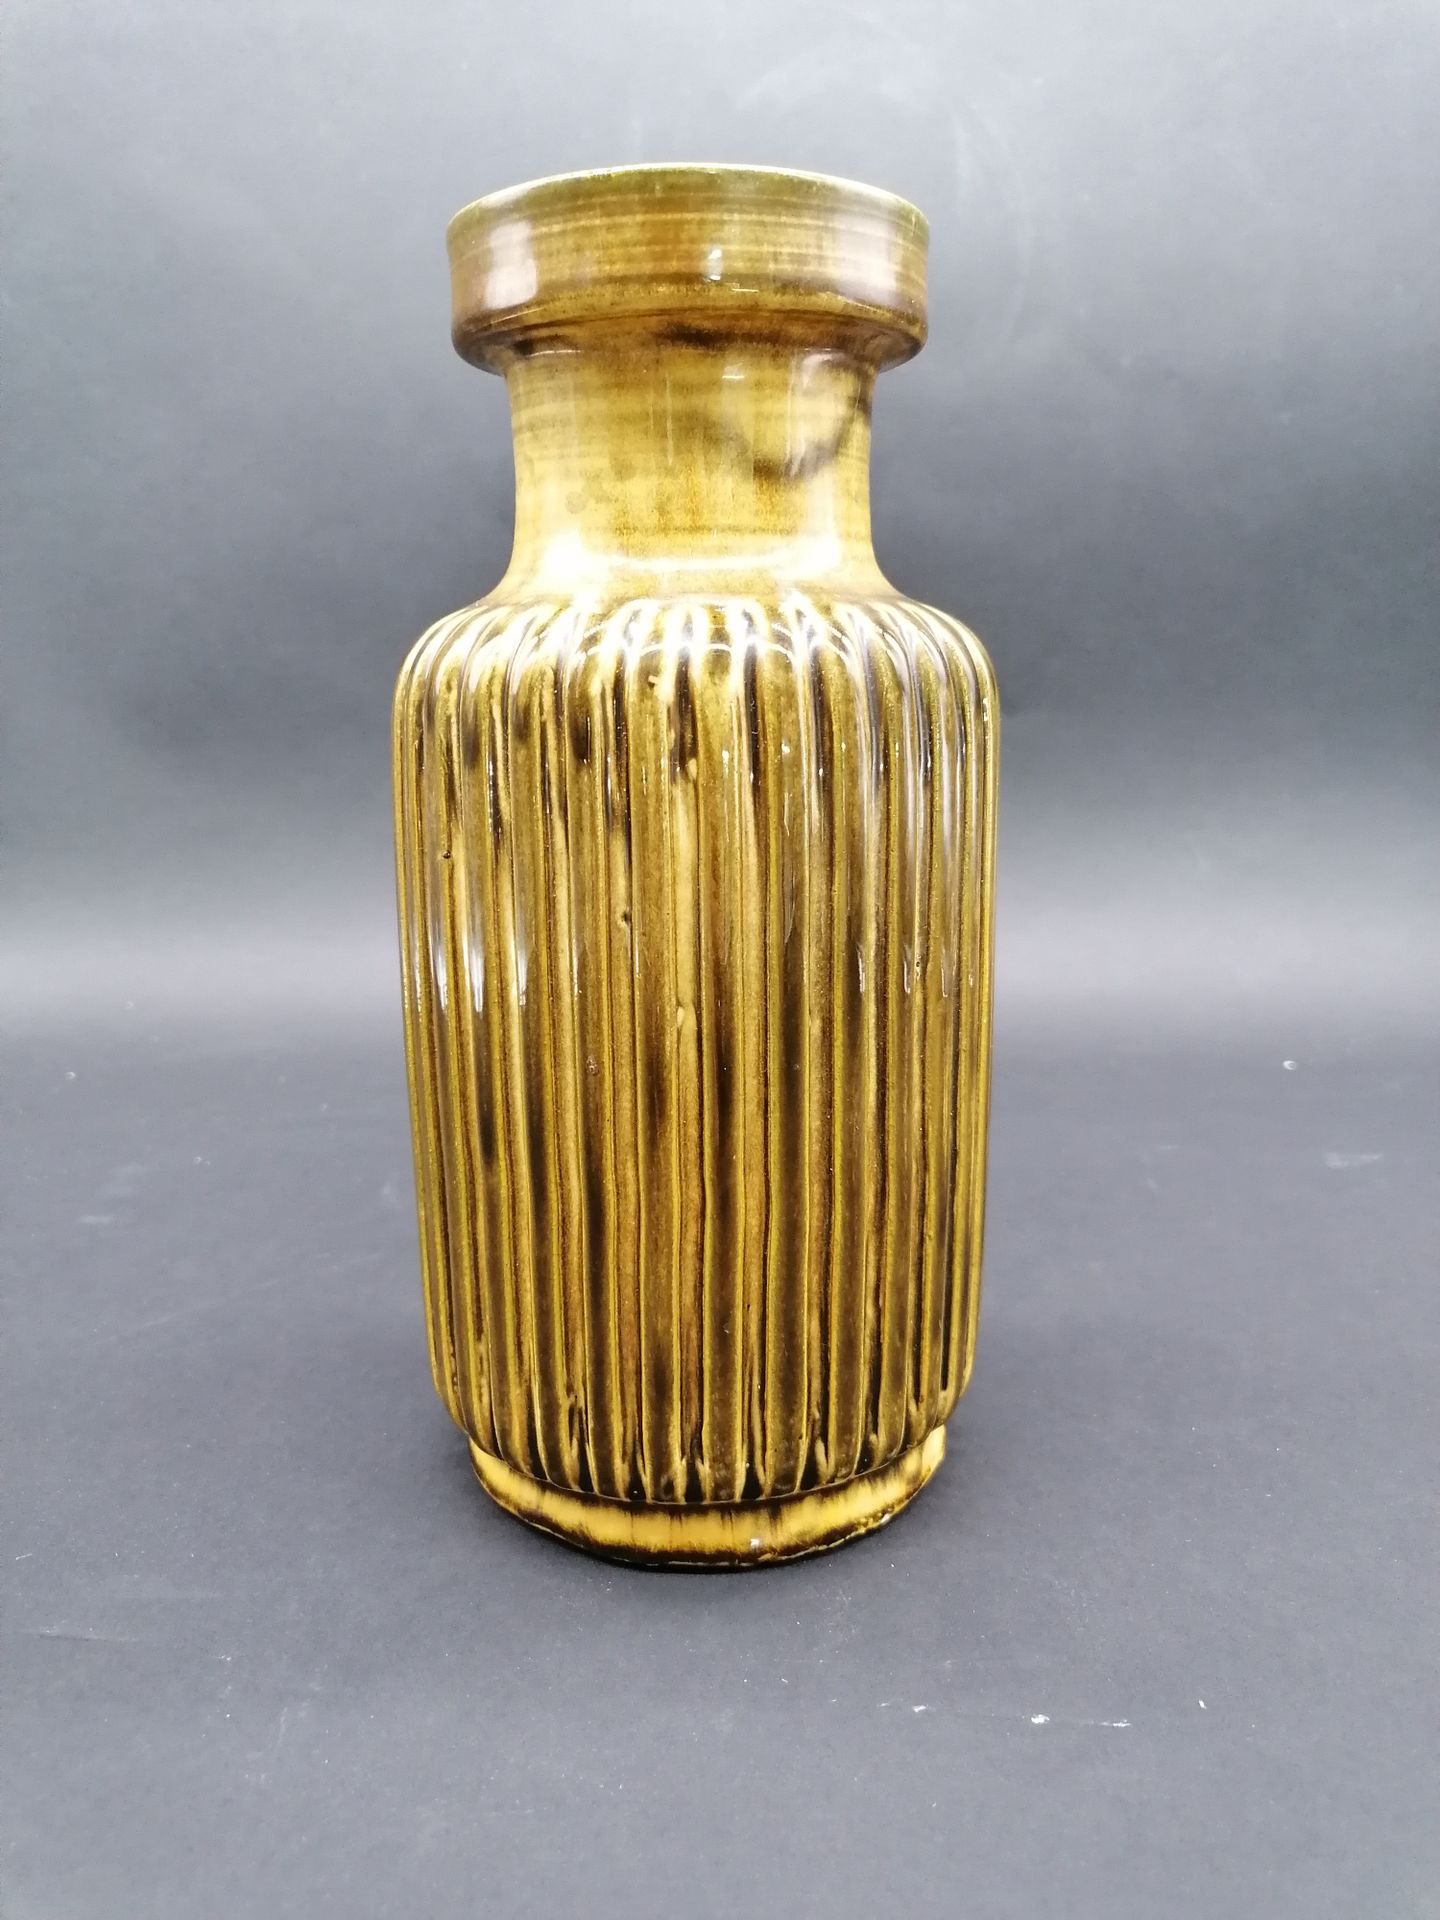 Hermann August KÄHLER (1846-1917) 赫尔曼-奥古斯特-卡勒(1846-1917)

狭长颈部的釉面陶器凹槽花瓶

在黄色/绿色的&hellip;